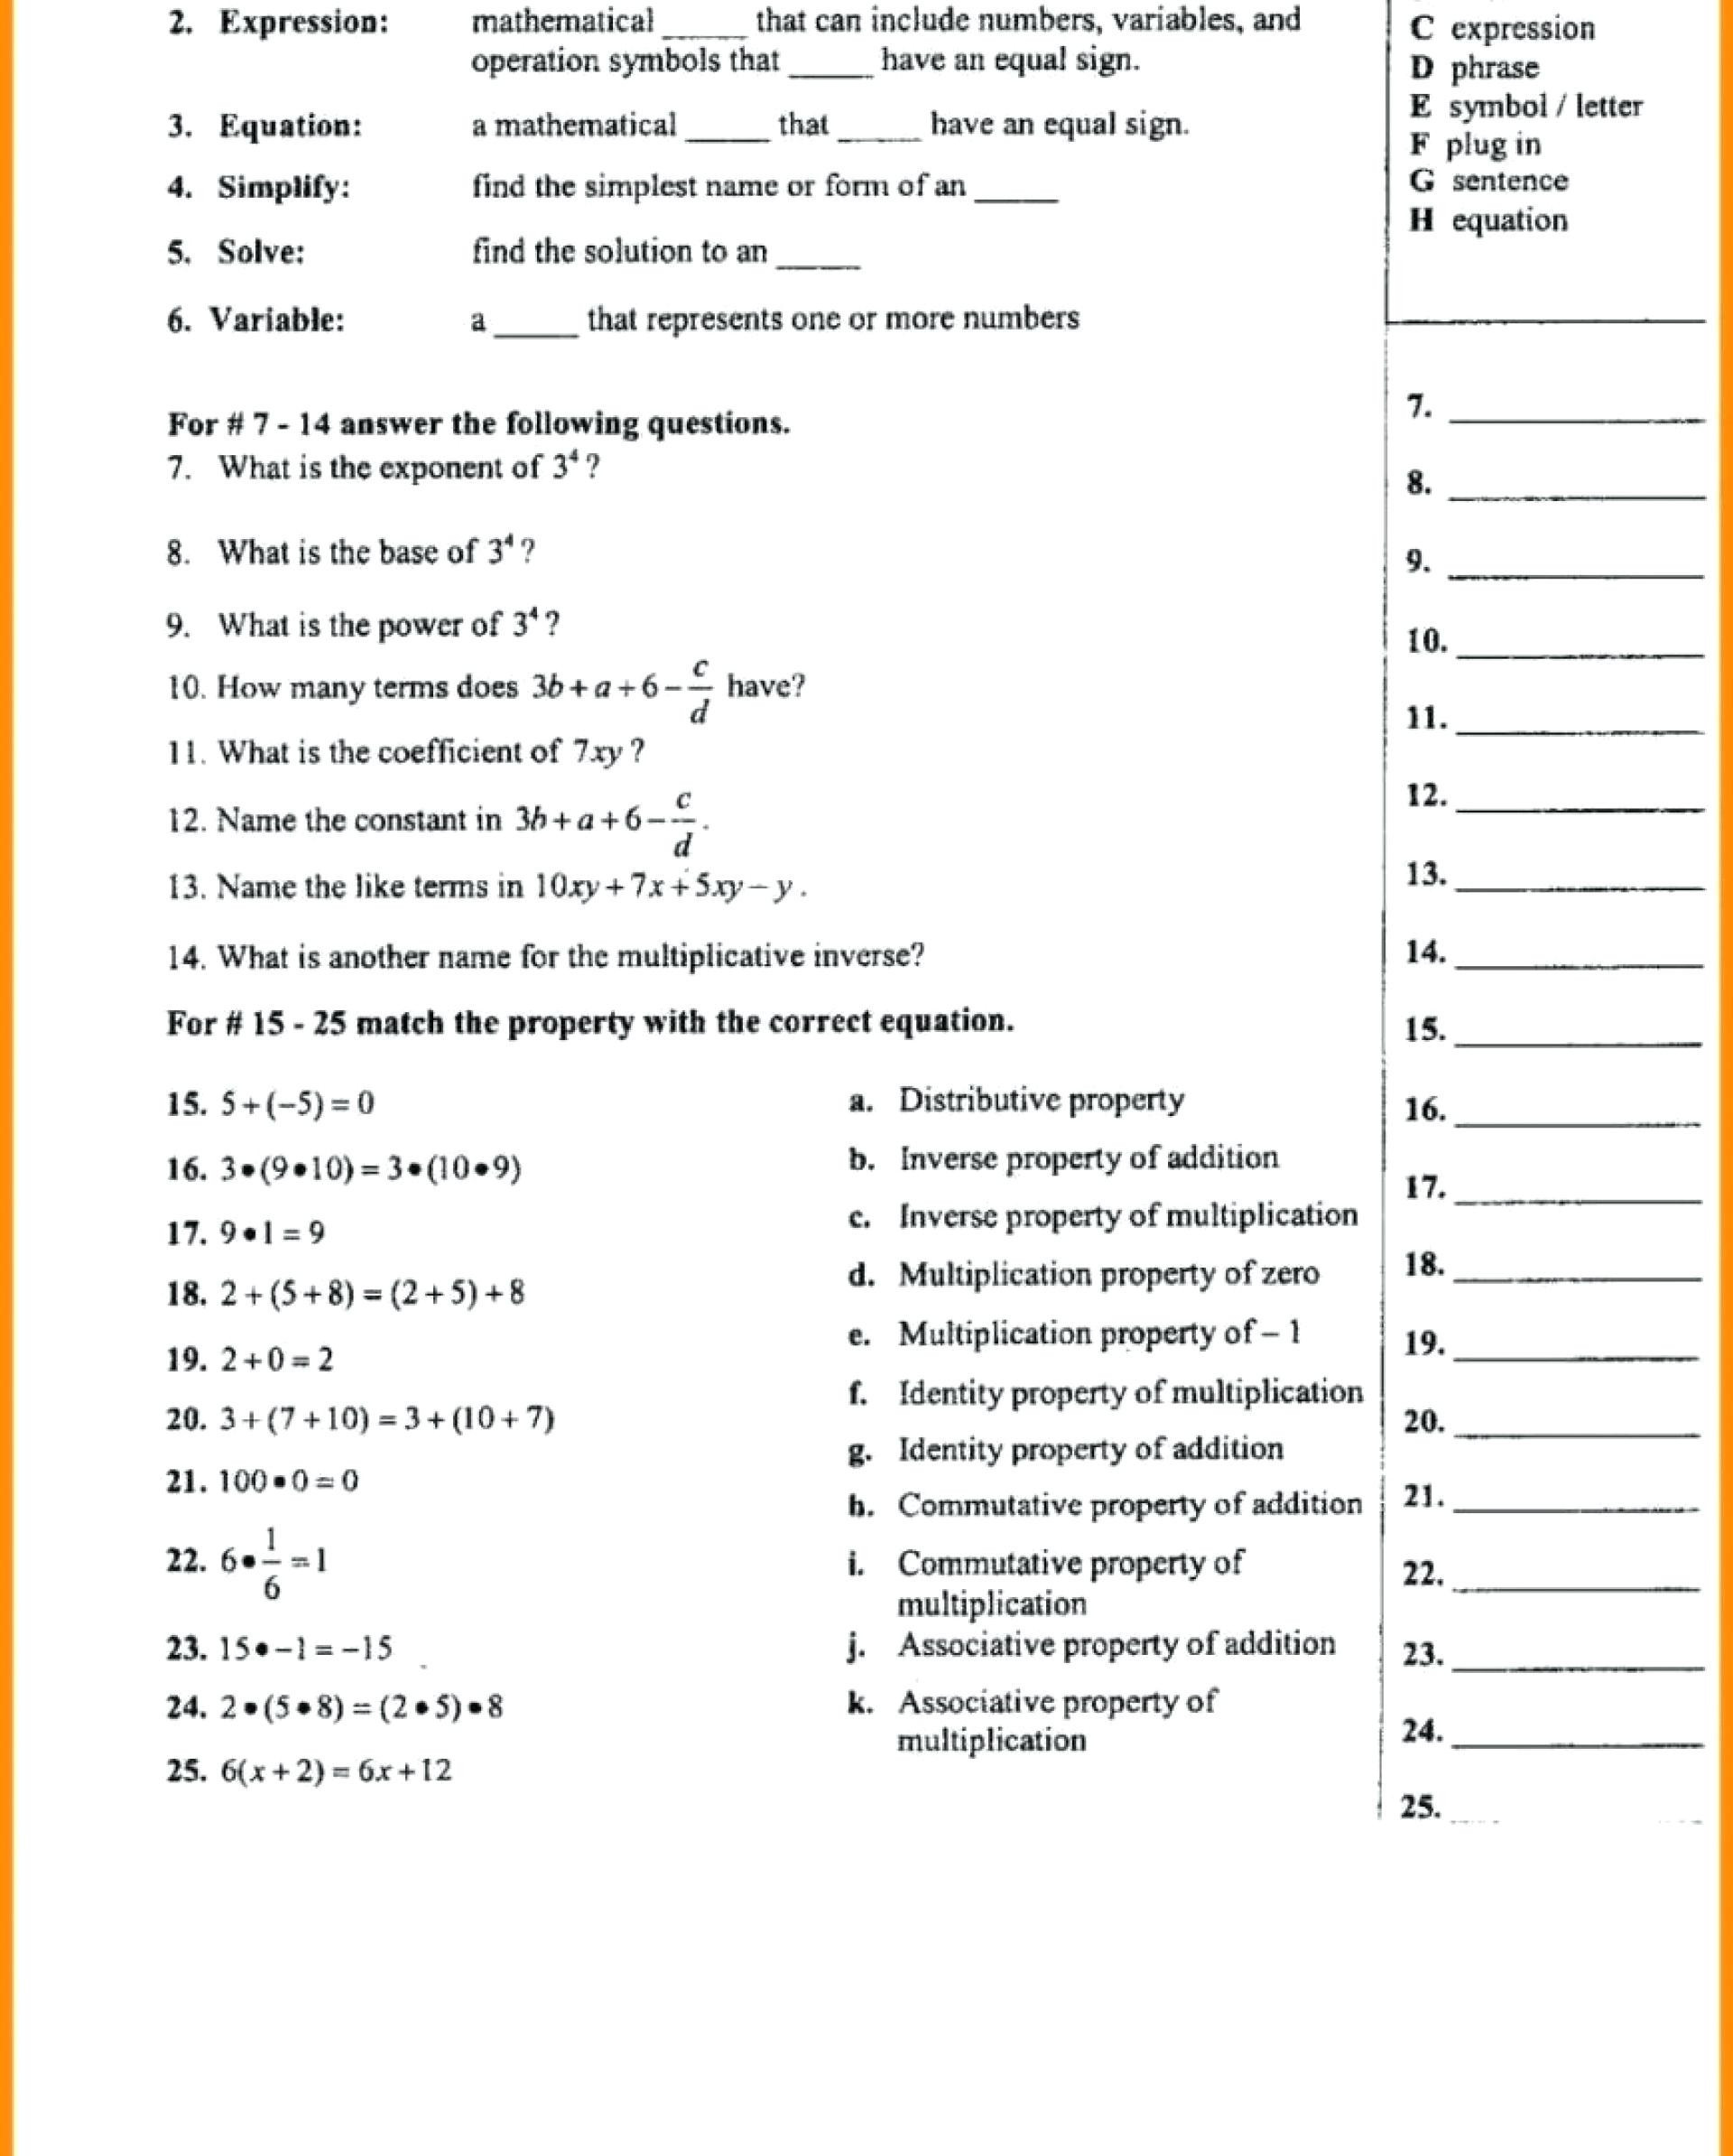 Measuring Worksheets for 3rd Grade 4 Free Math Worksheets Third Grade 3 Measurement Metric